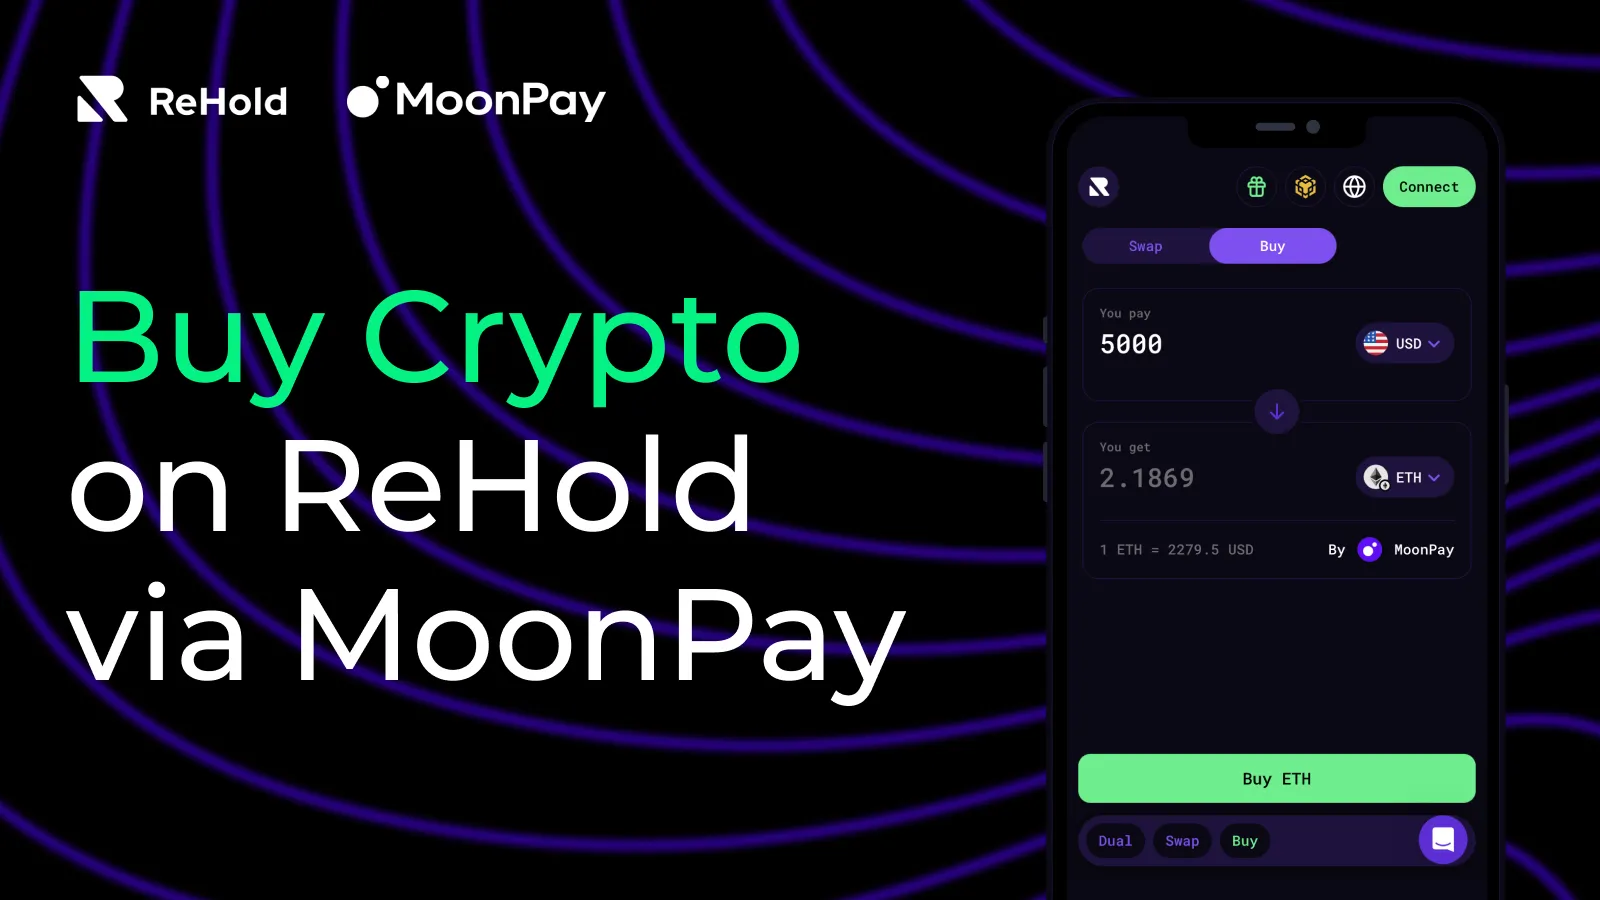 Buy Crypto Easily on ReHold via MoonPay